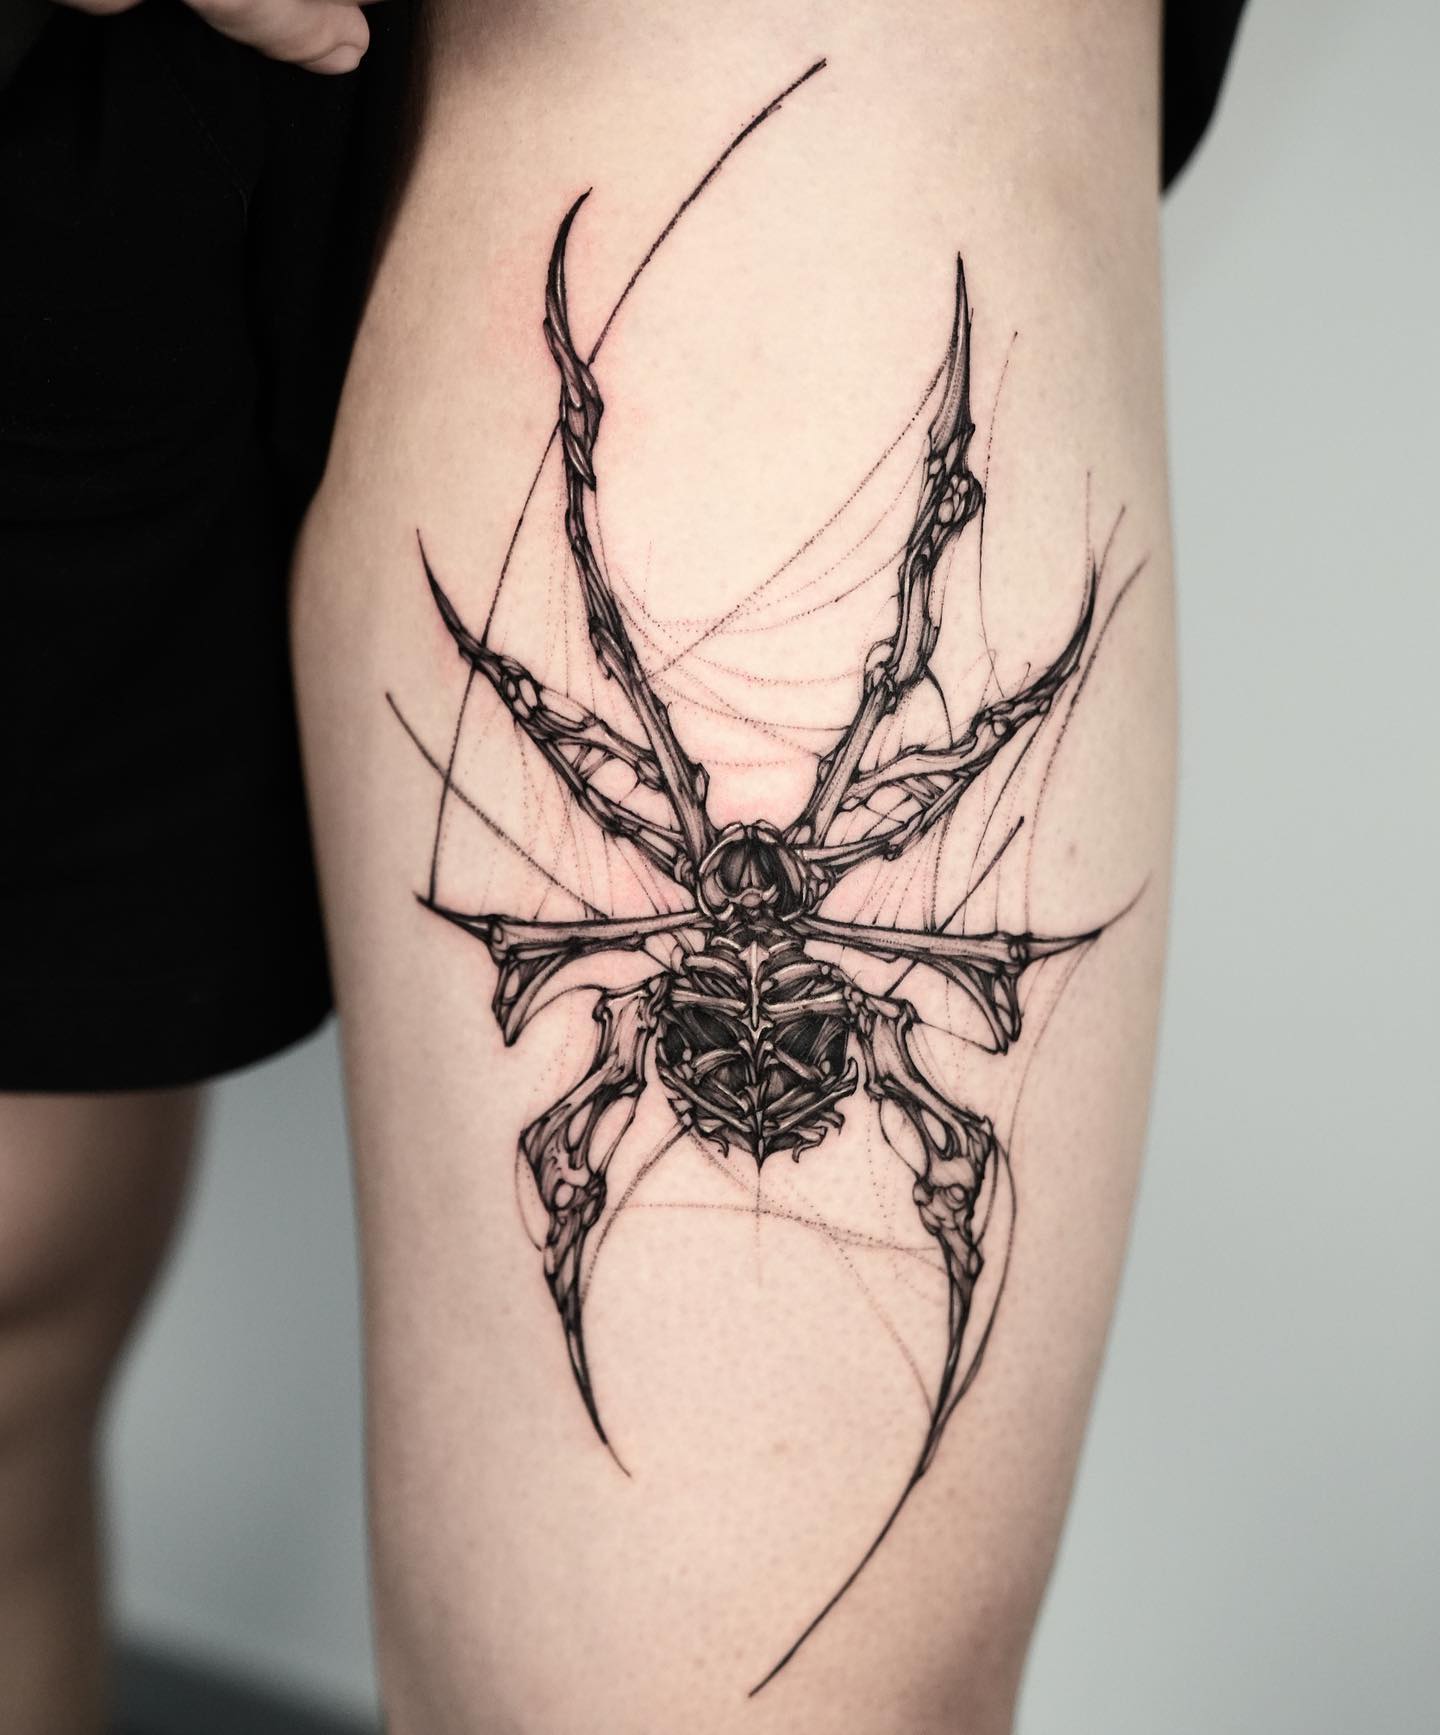 Amazing spider tattoo by timor tt